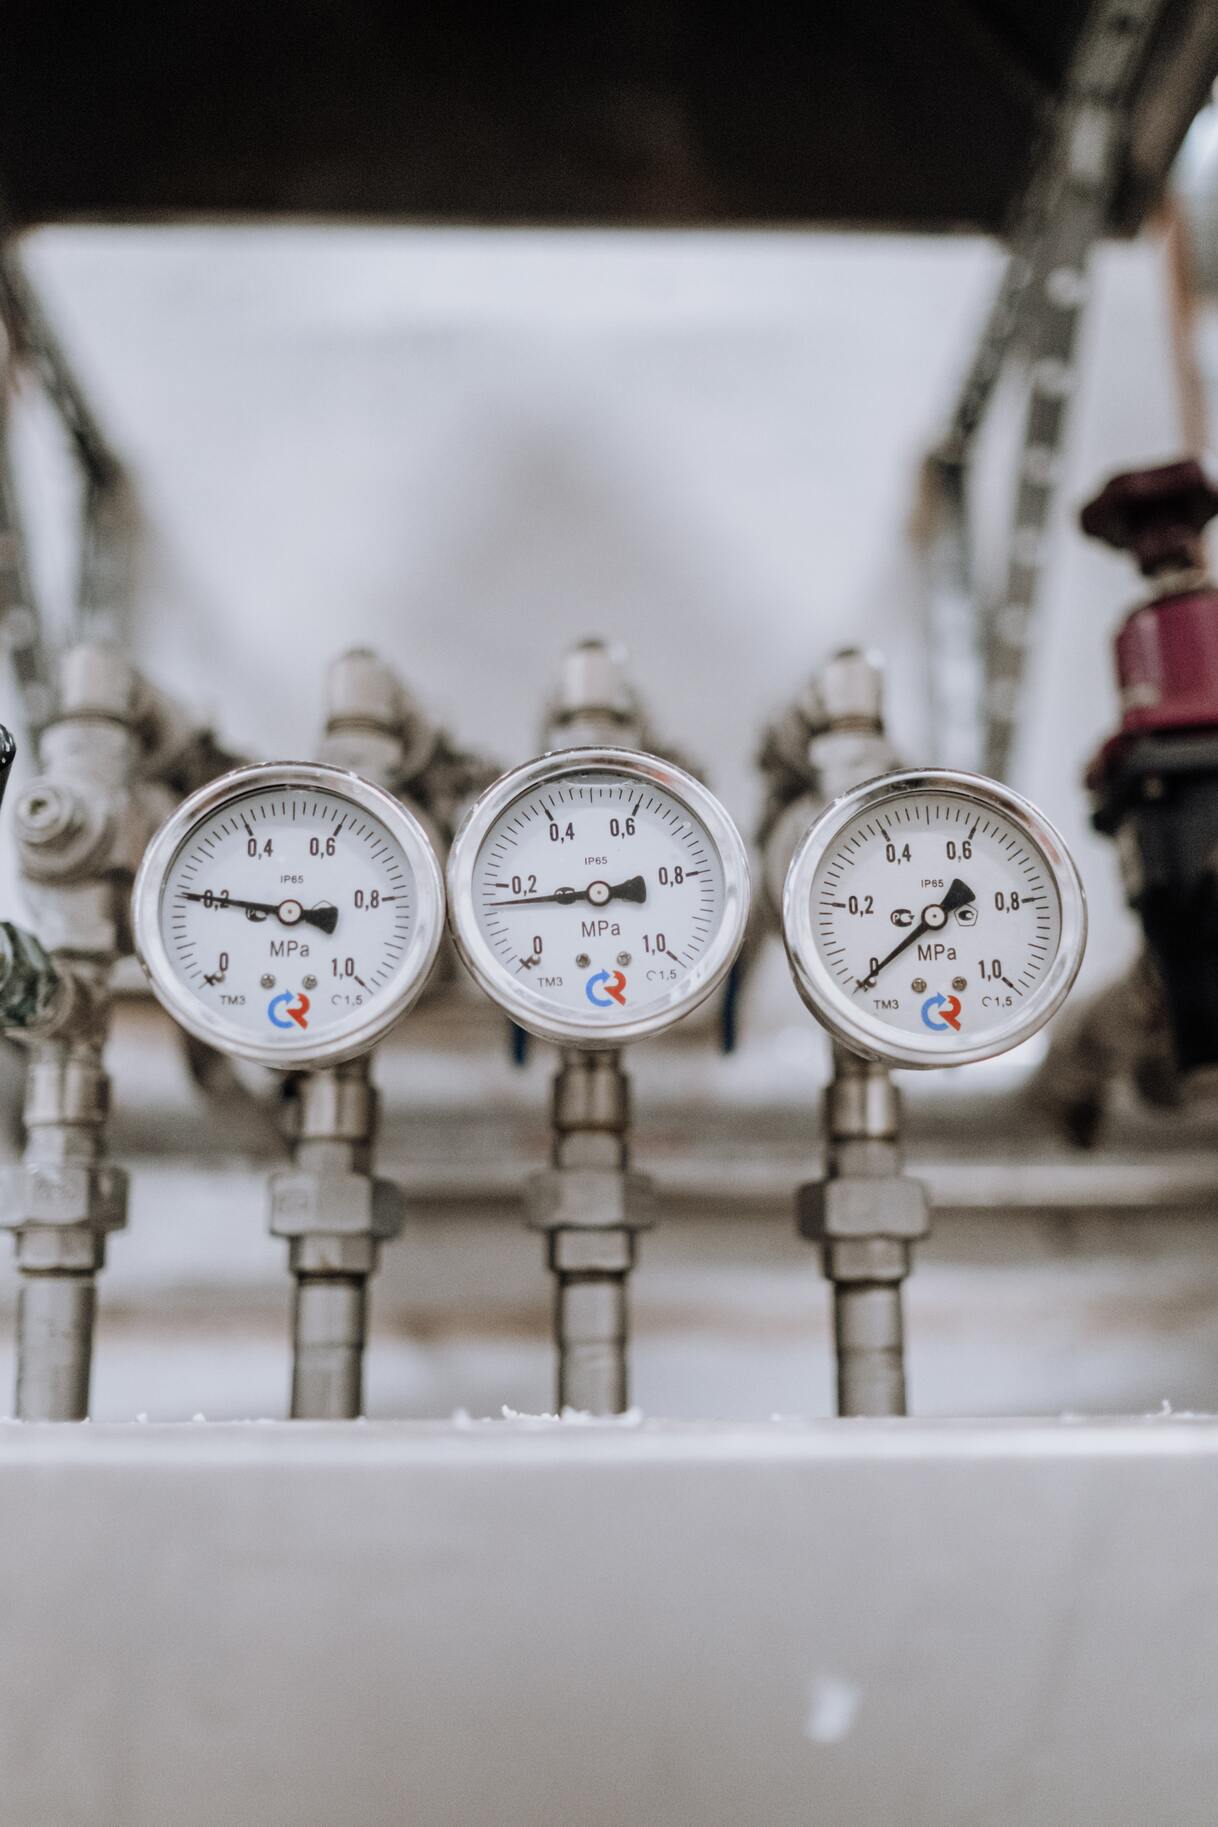 A Nitrous Oxide Pressure Regulator – How to Use